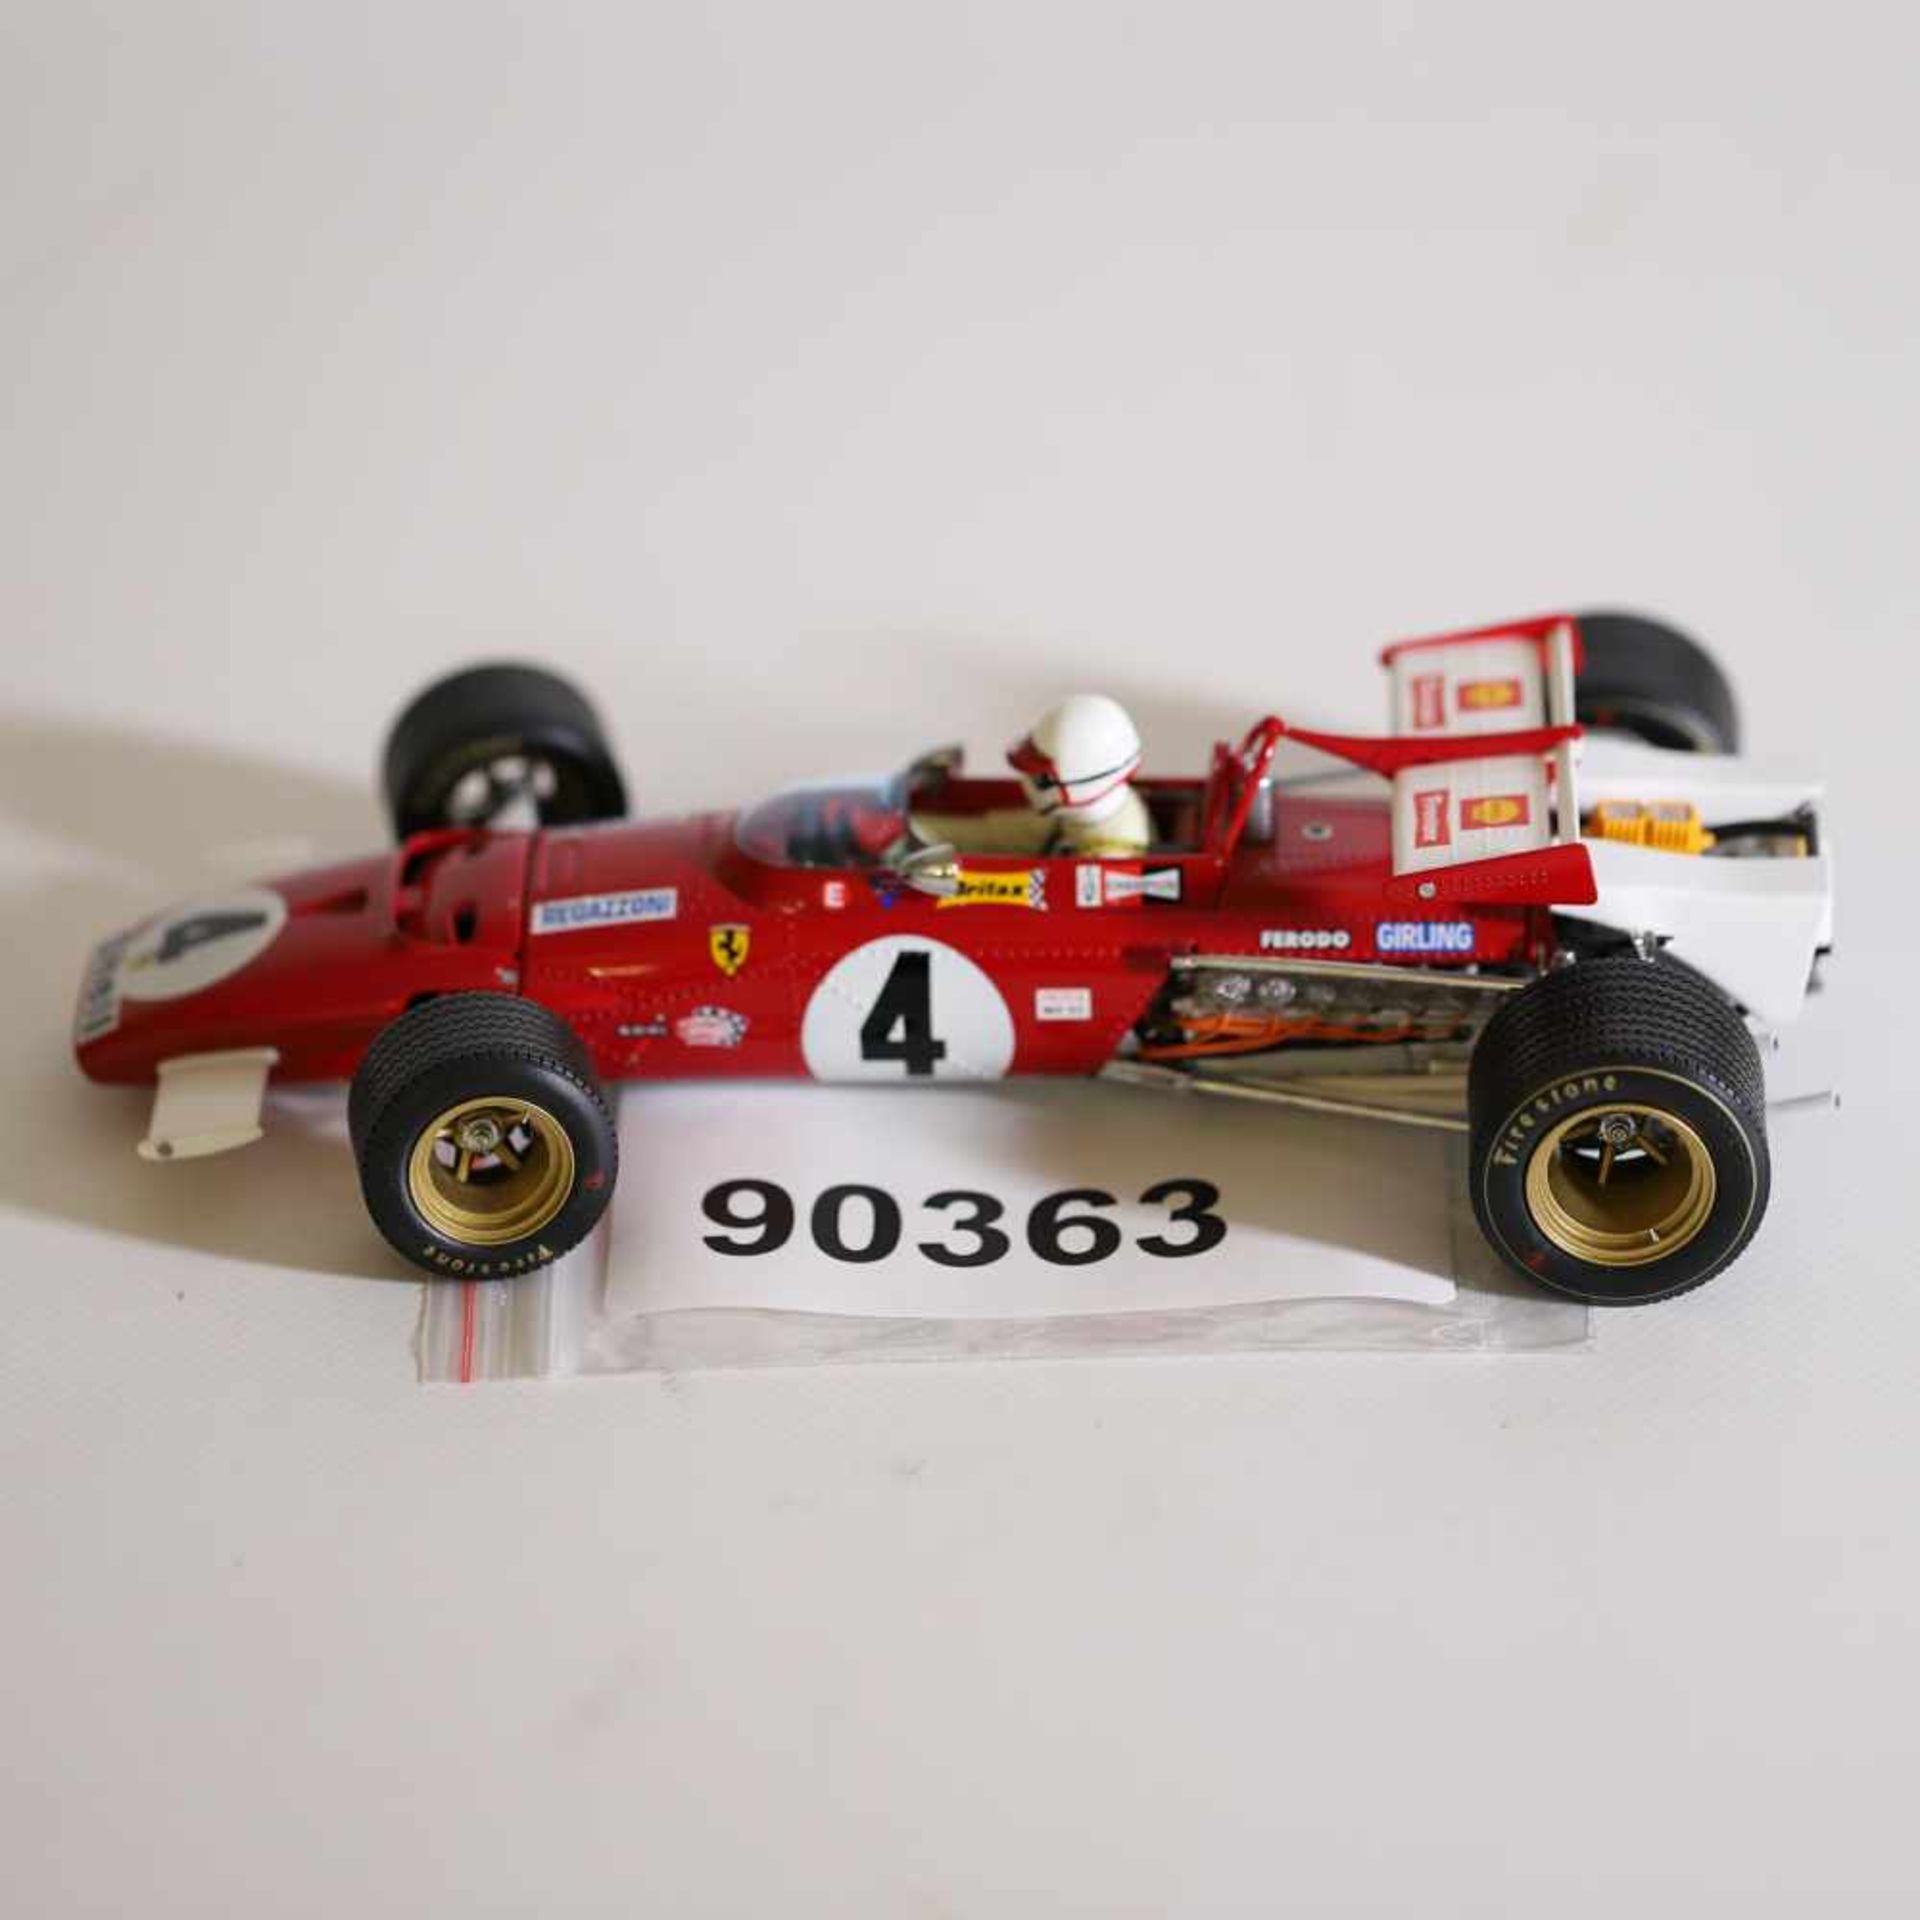 Exoto 1:18 Ferrari 312 B , Regazzoni (Nr. 4), guter Zustand- - -20.00 % buyer's premium on the